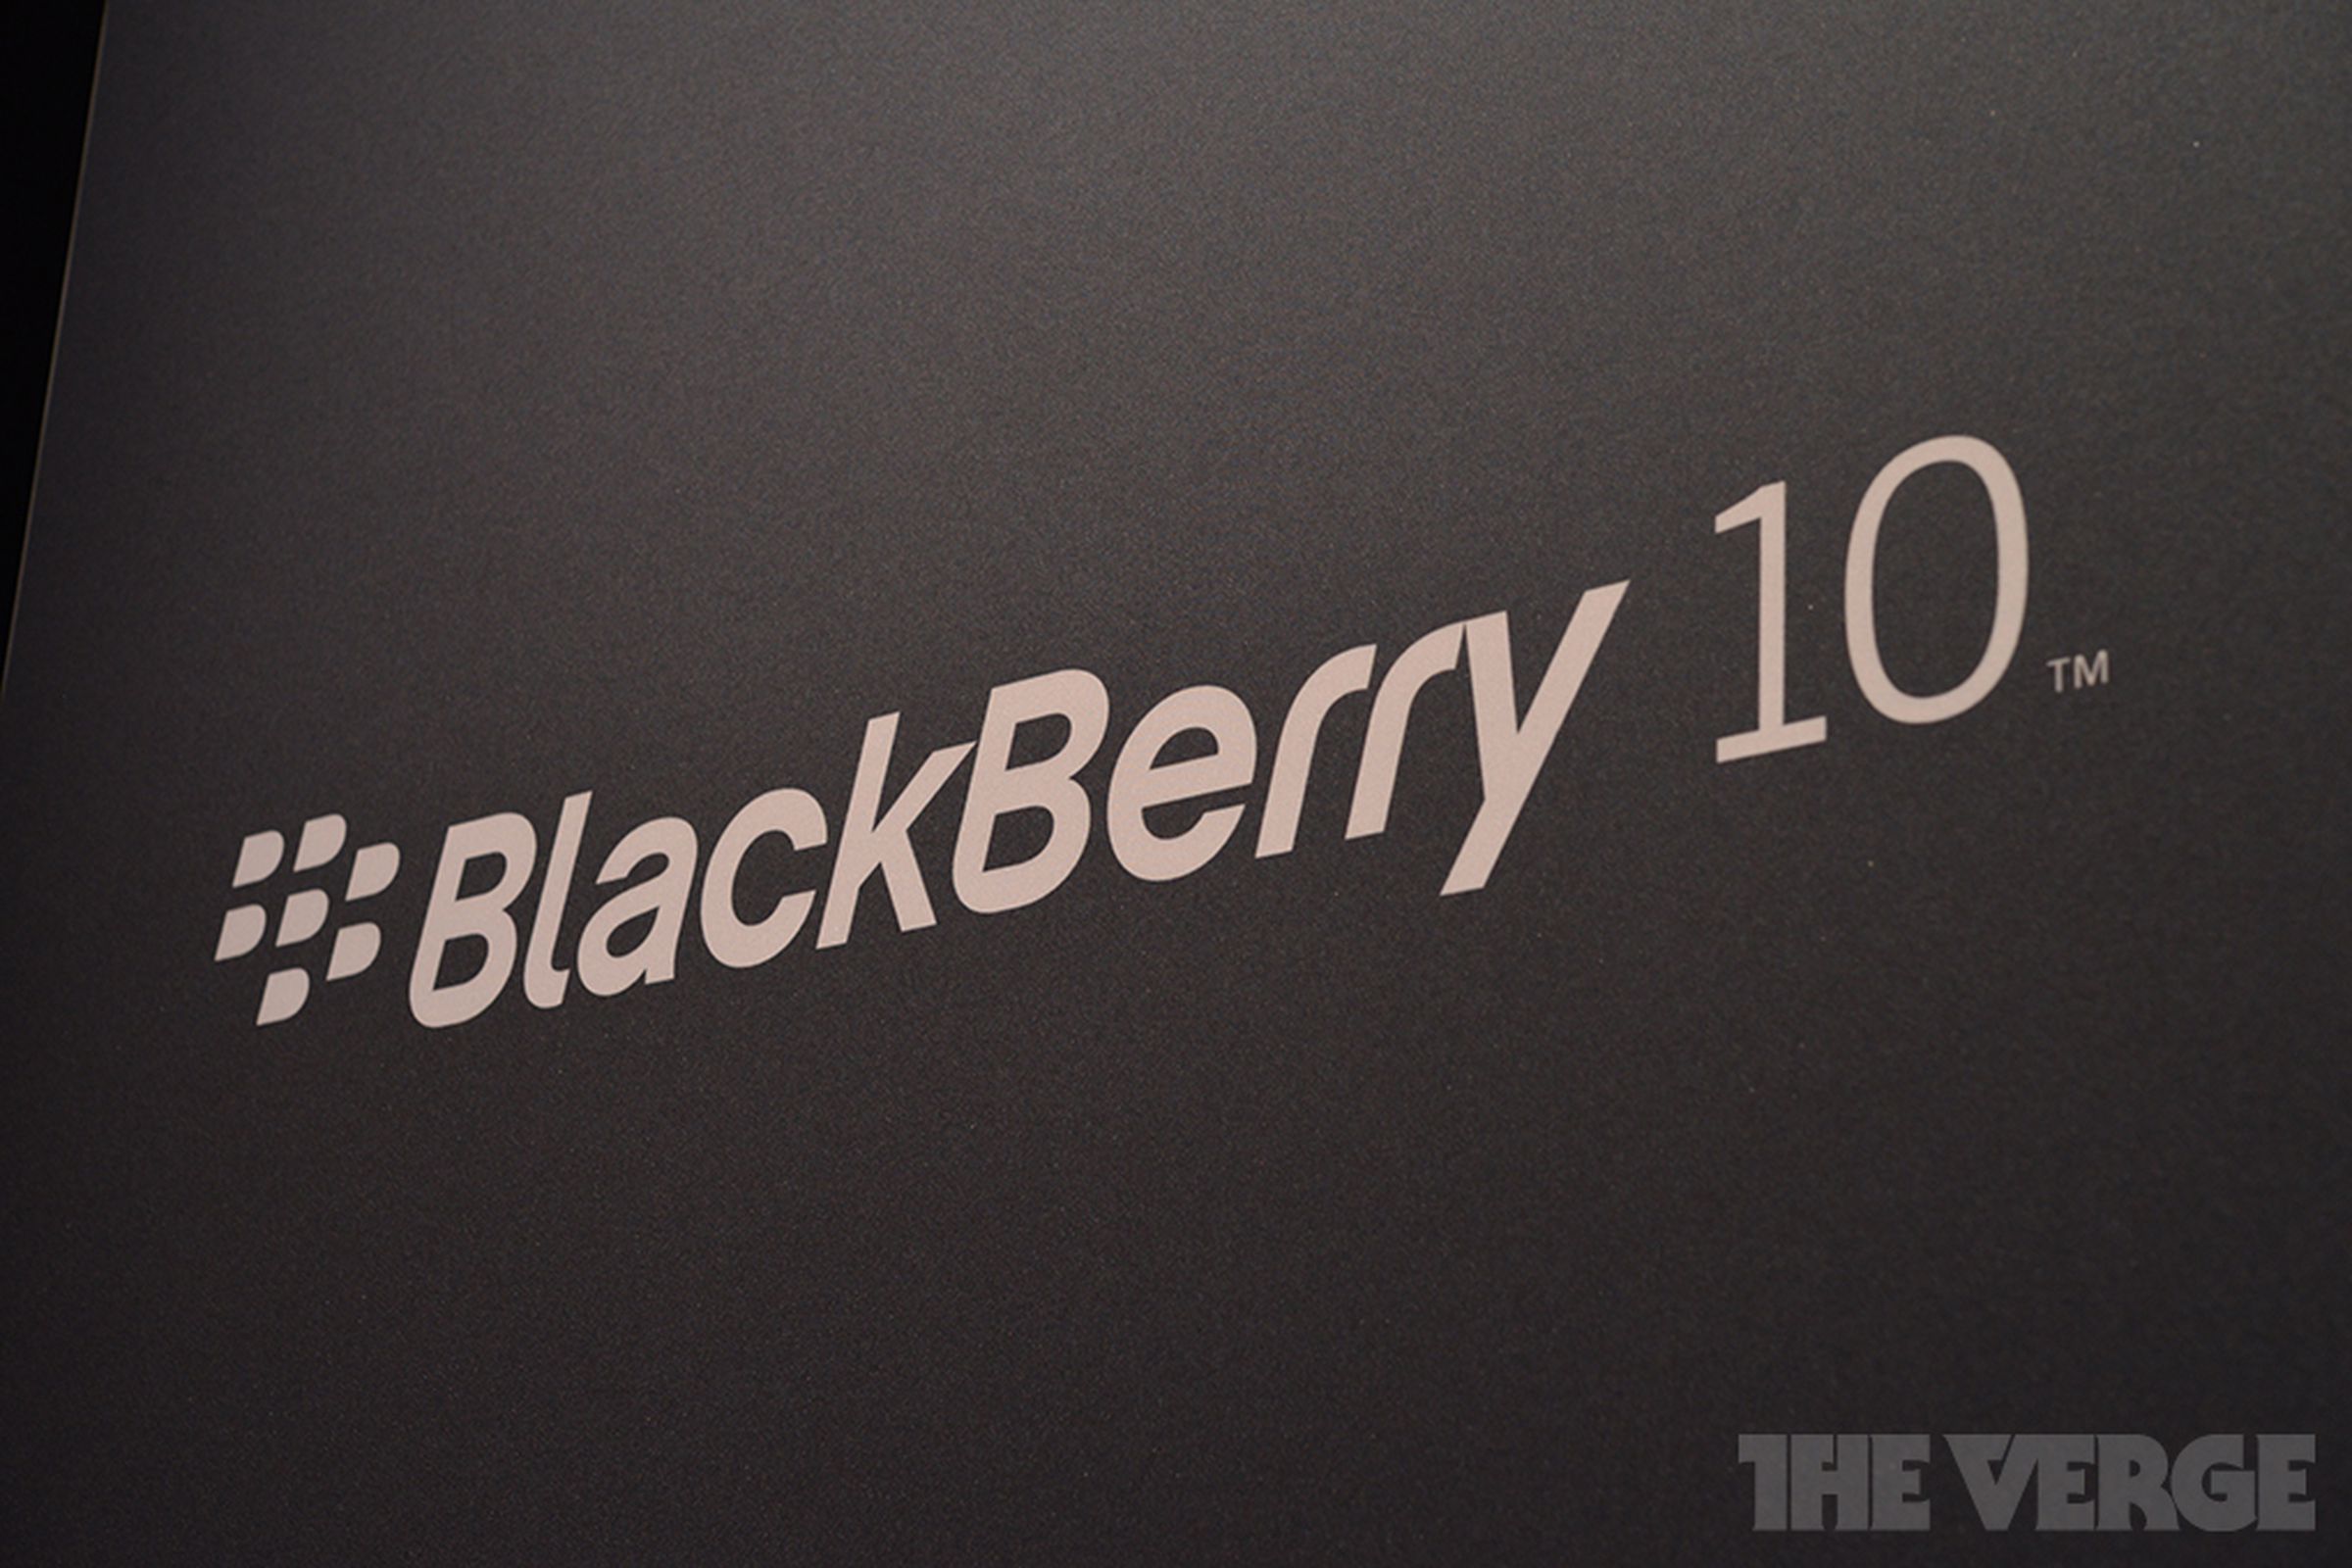 Blackberry 10 Experience event (STOCK)